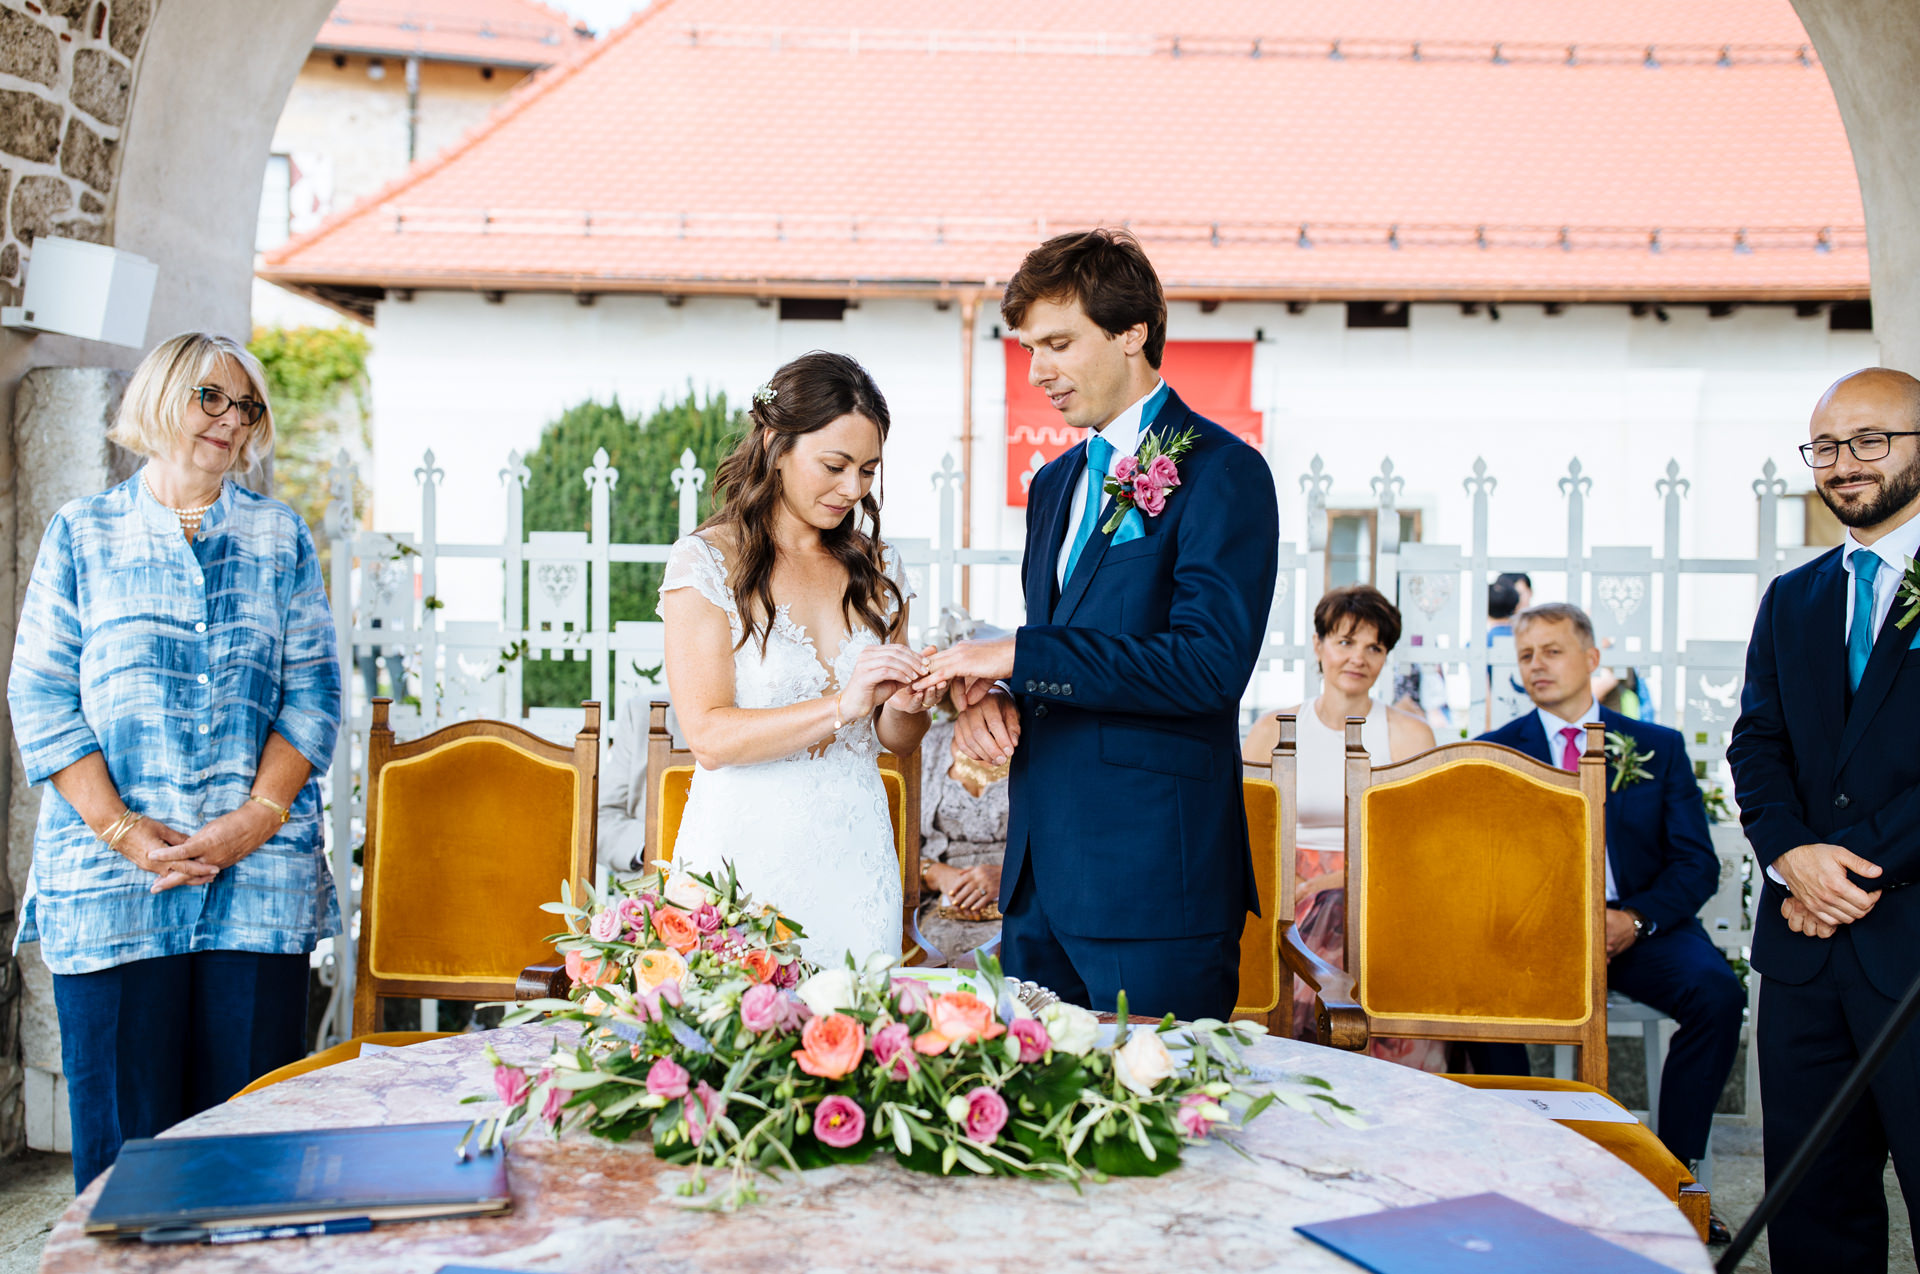 ring exchange at lake bled wedding ceremony at bled castle